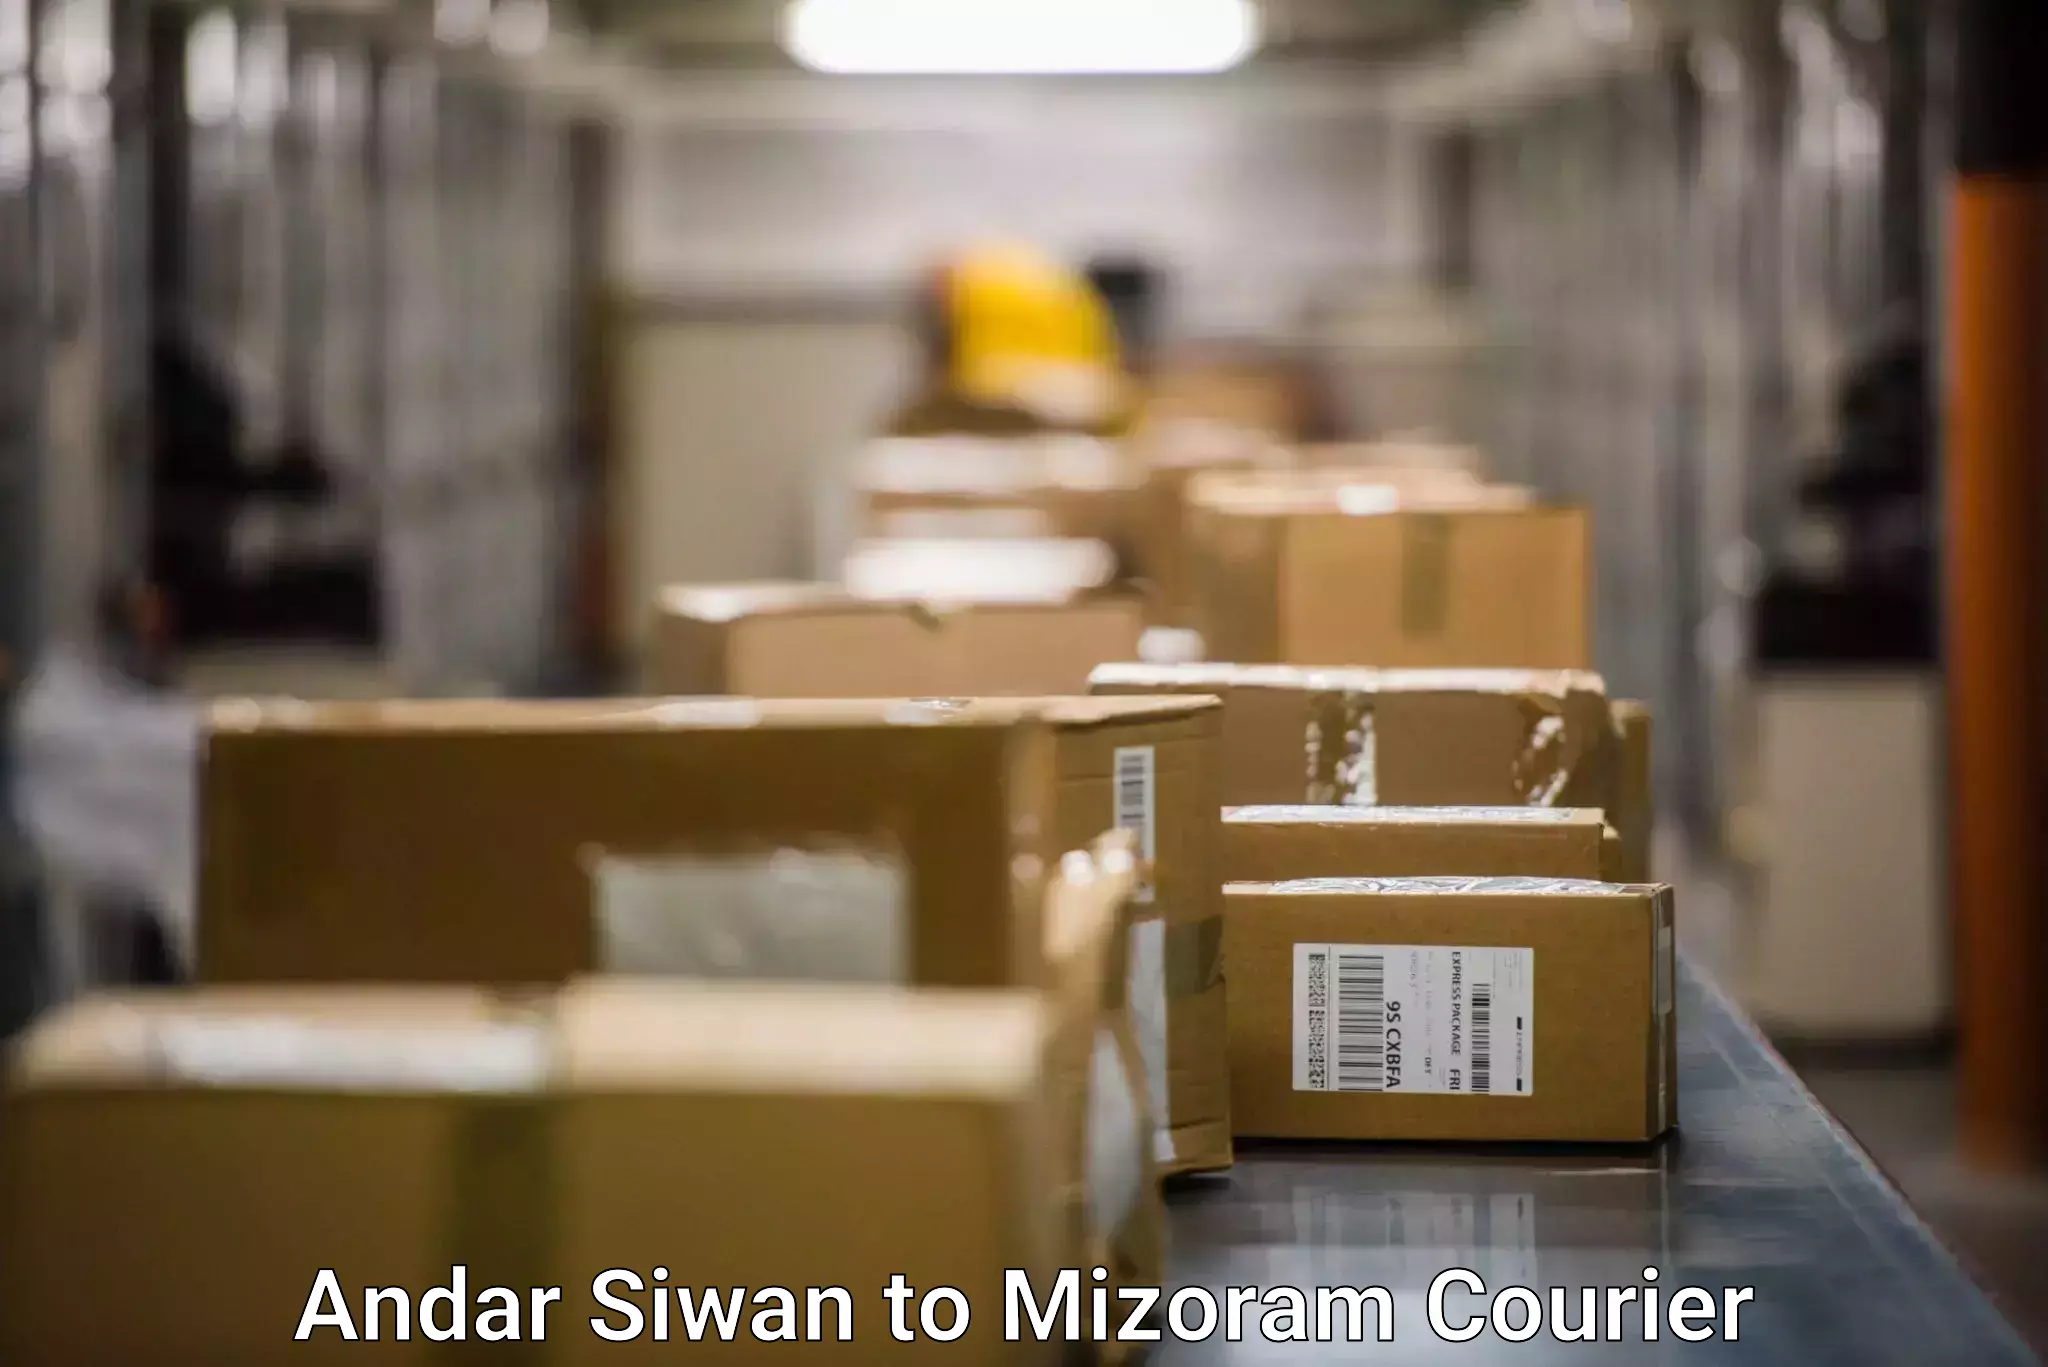 Courier service comparison Andar Siwan to Mizoram